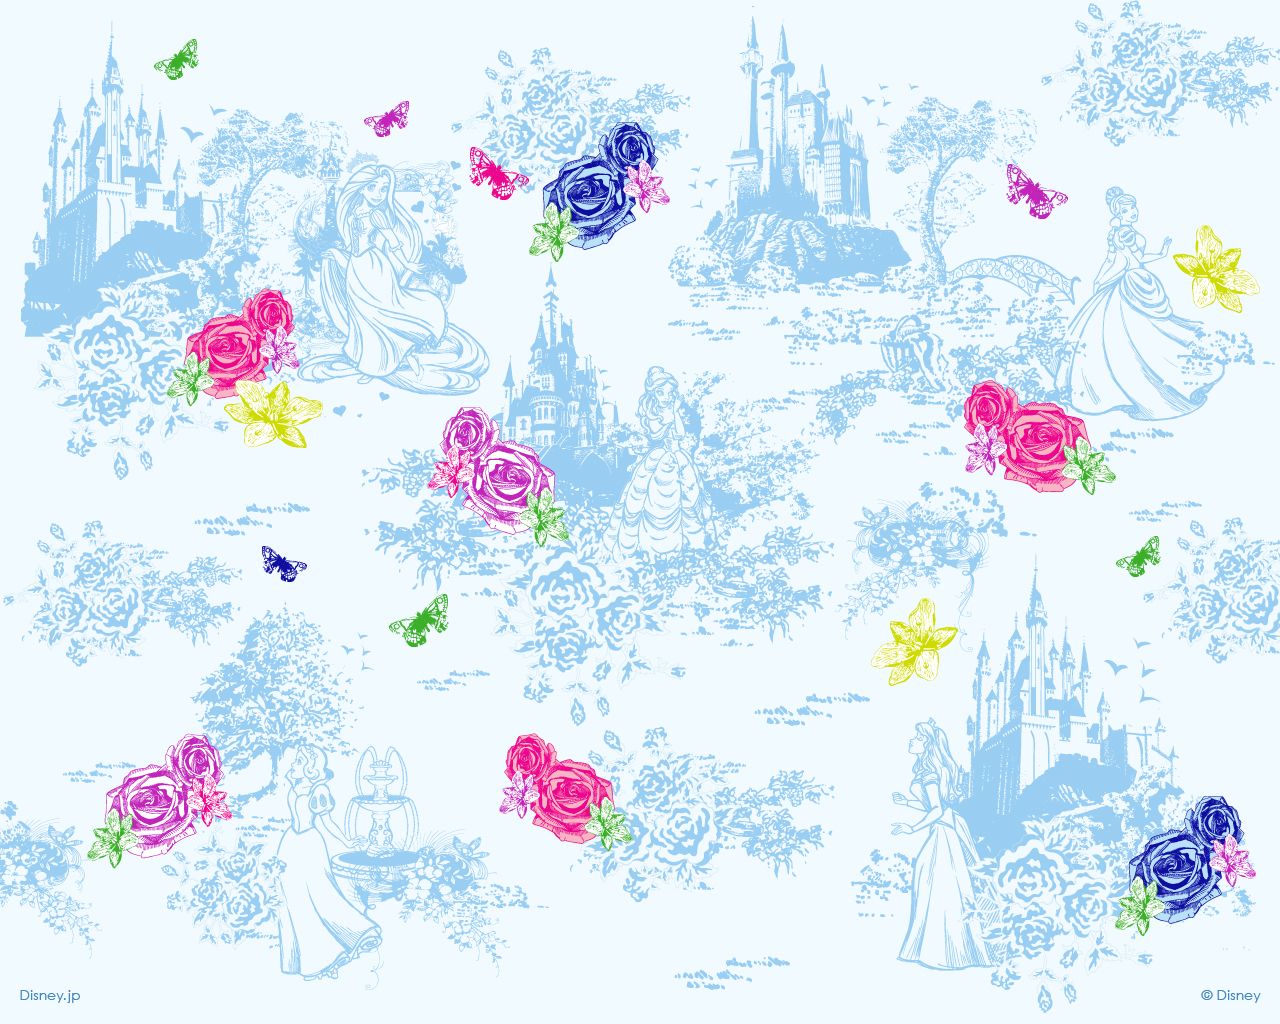 Disney Princesses Wallpaper - Disney Princess Wallpaper (37201416 ...